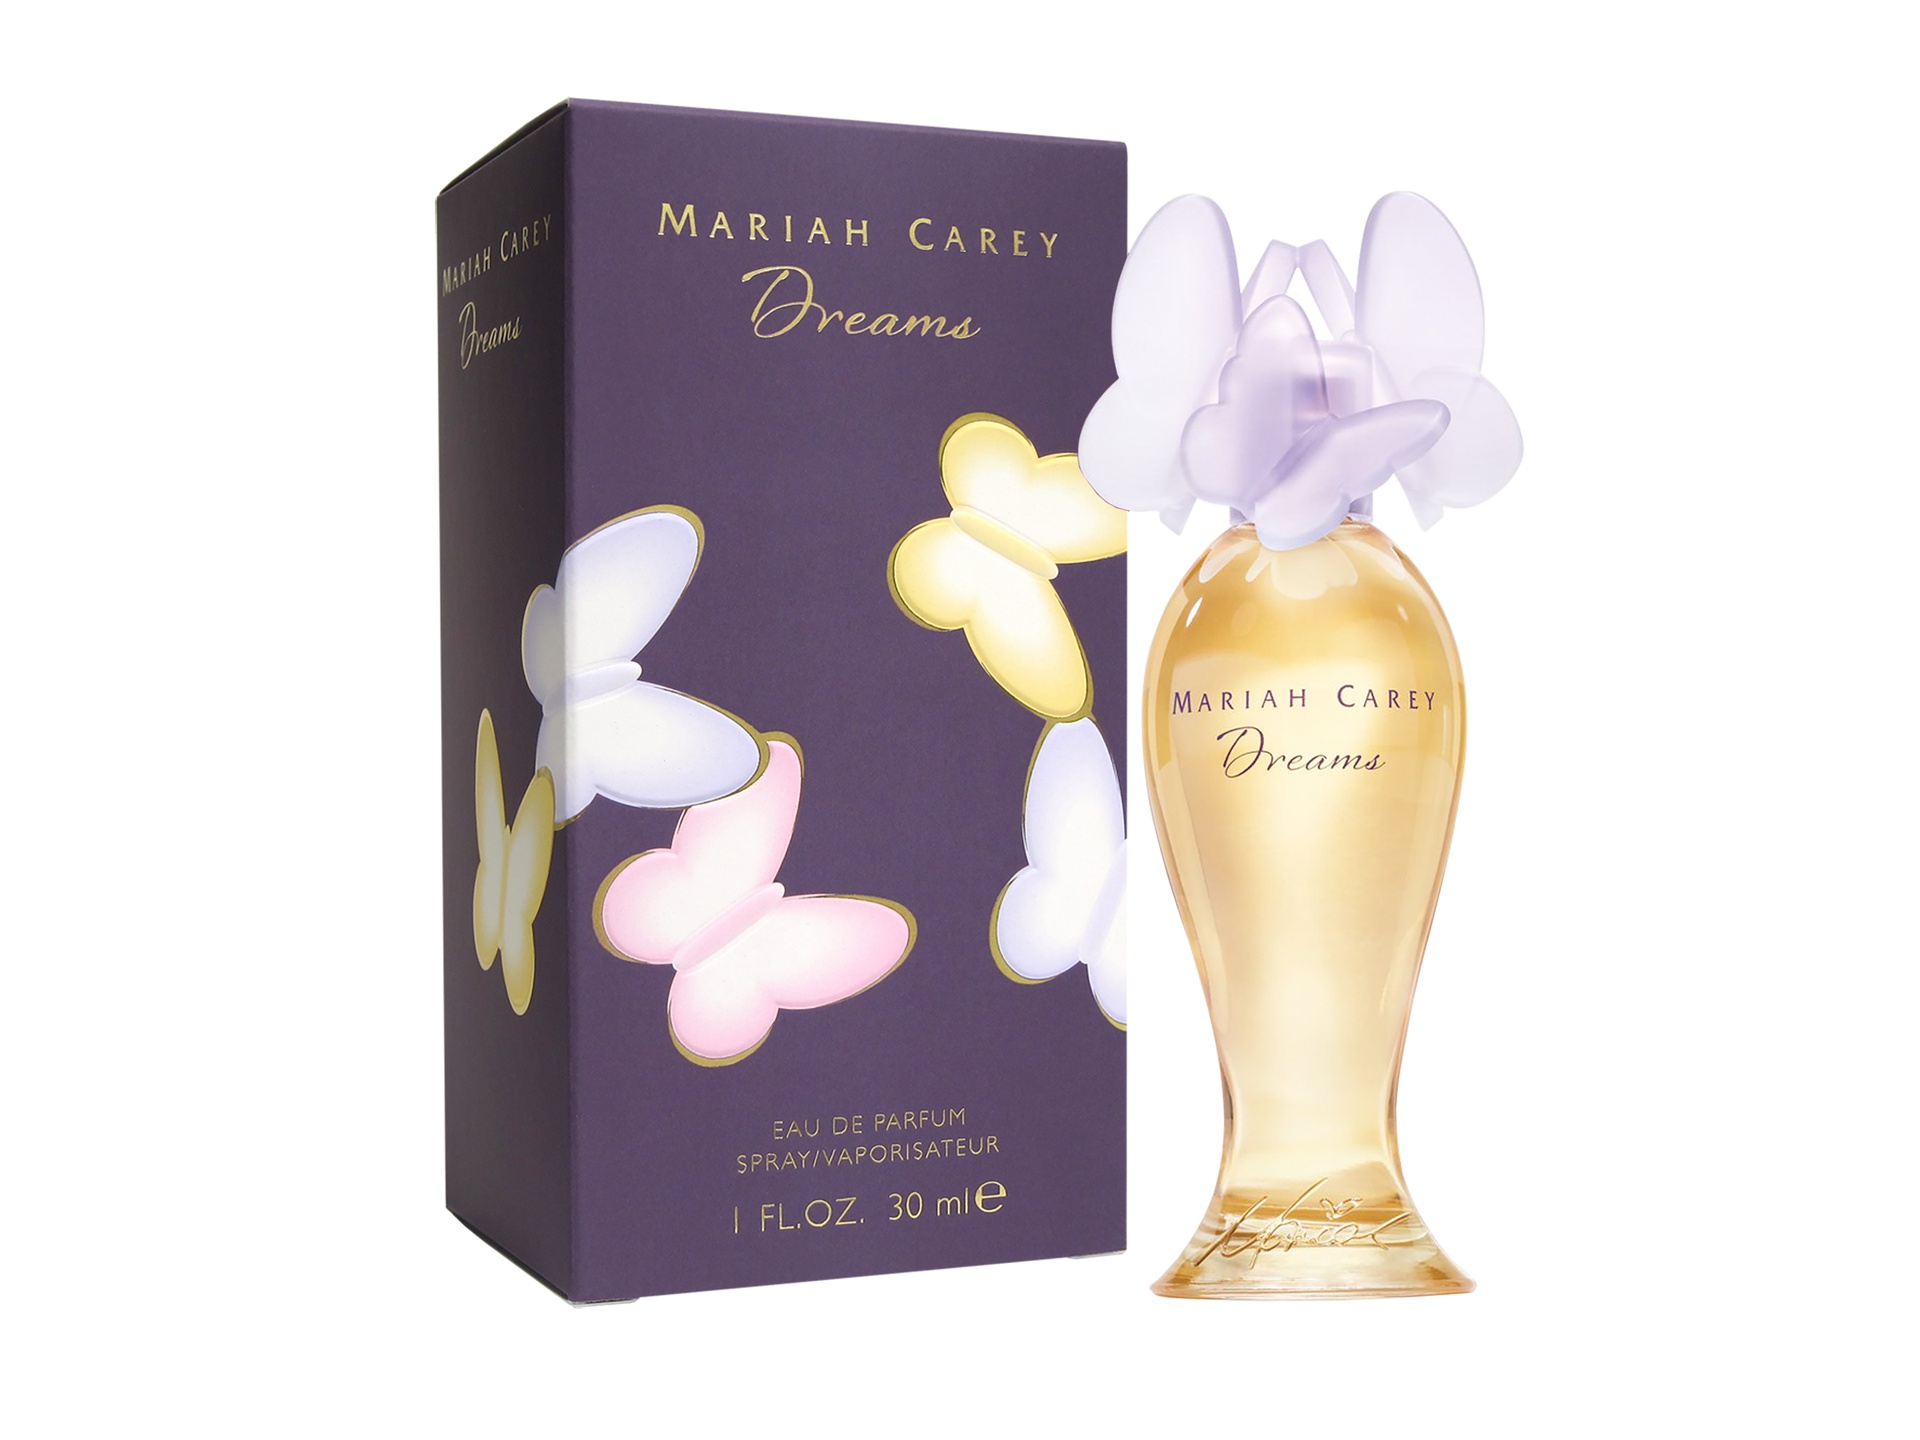 Mariah Carey Dreams fragrance bottle and box